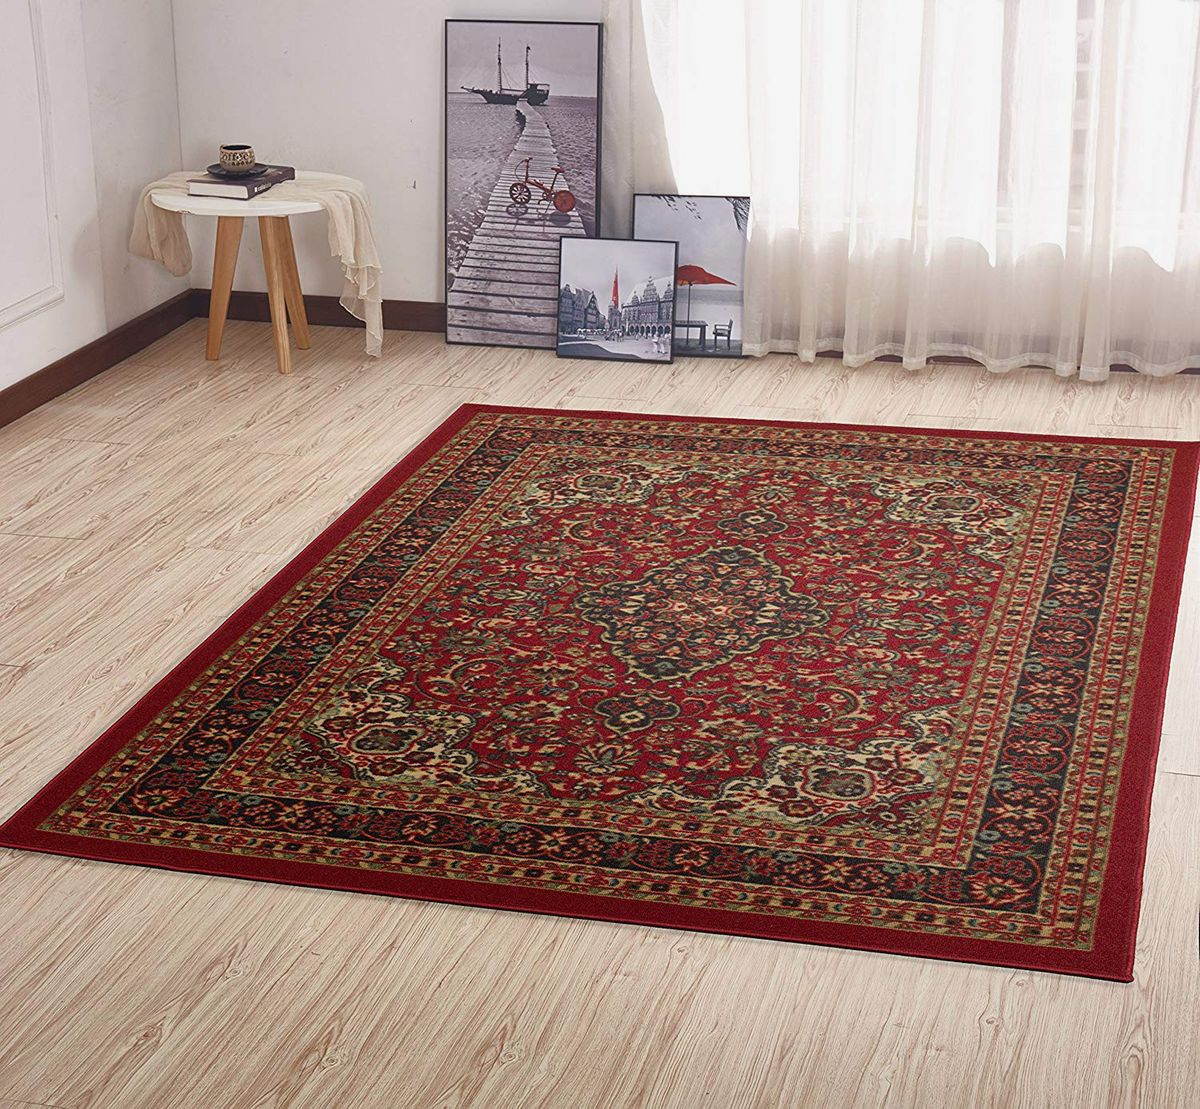 Vintage rug Area rug Country rug,AY969 Floral rug Handmade rug 4.3x8.9 ft rug Large rug Rustic rug Turkish rug Boho rug Decor rug